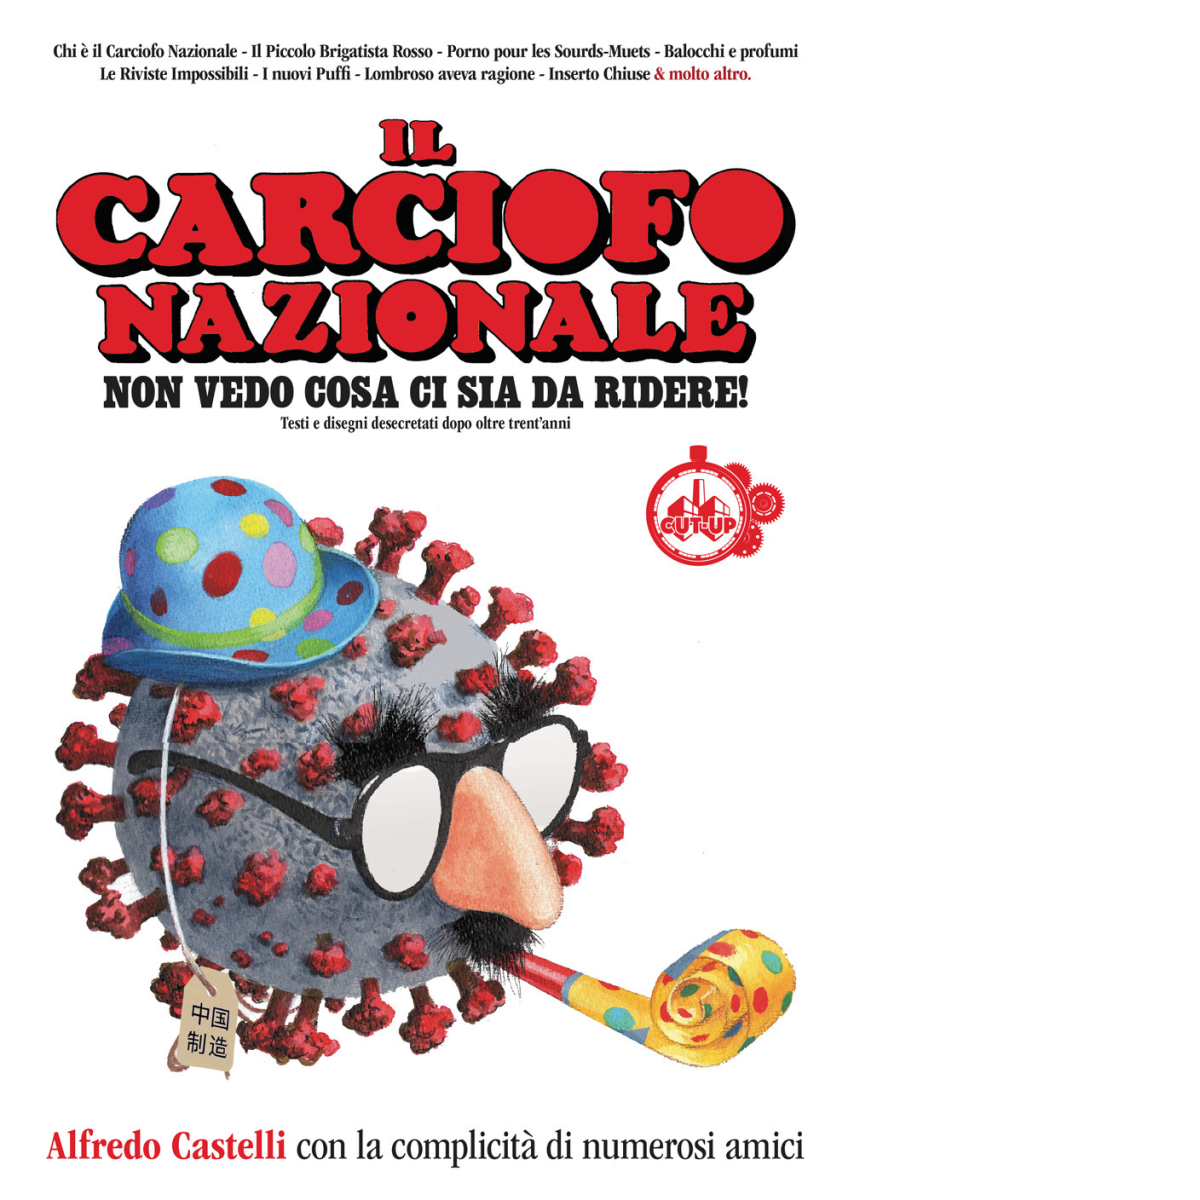 Il Carciofo Nazionale - Alfredo Castelli - cut-up, 2021